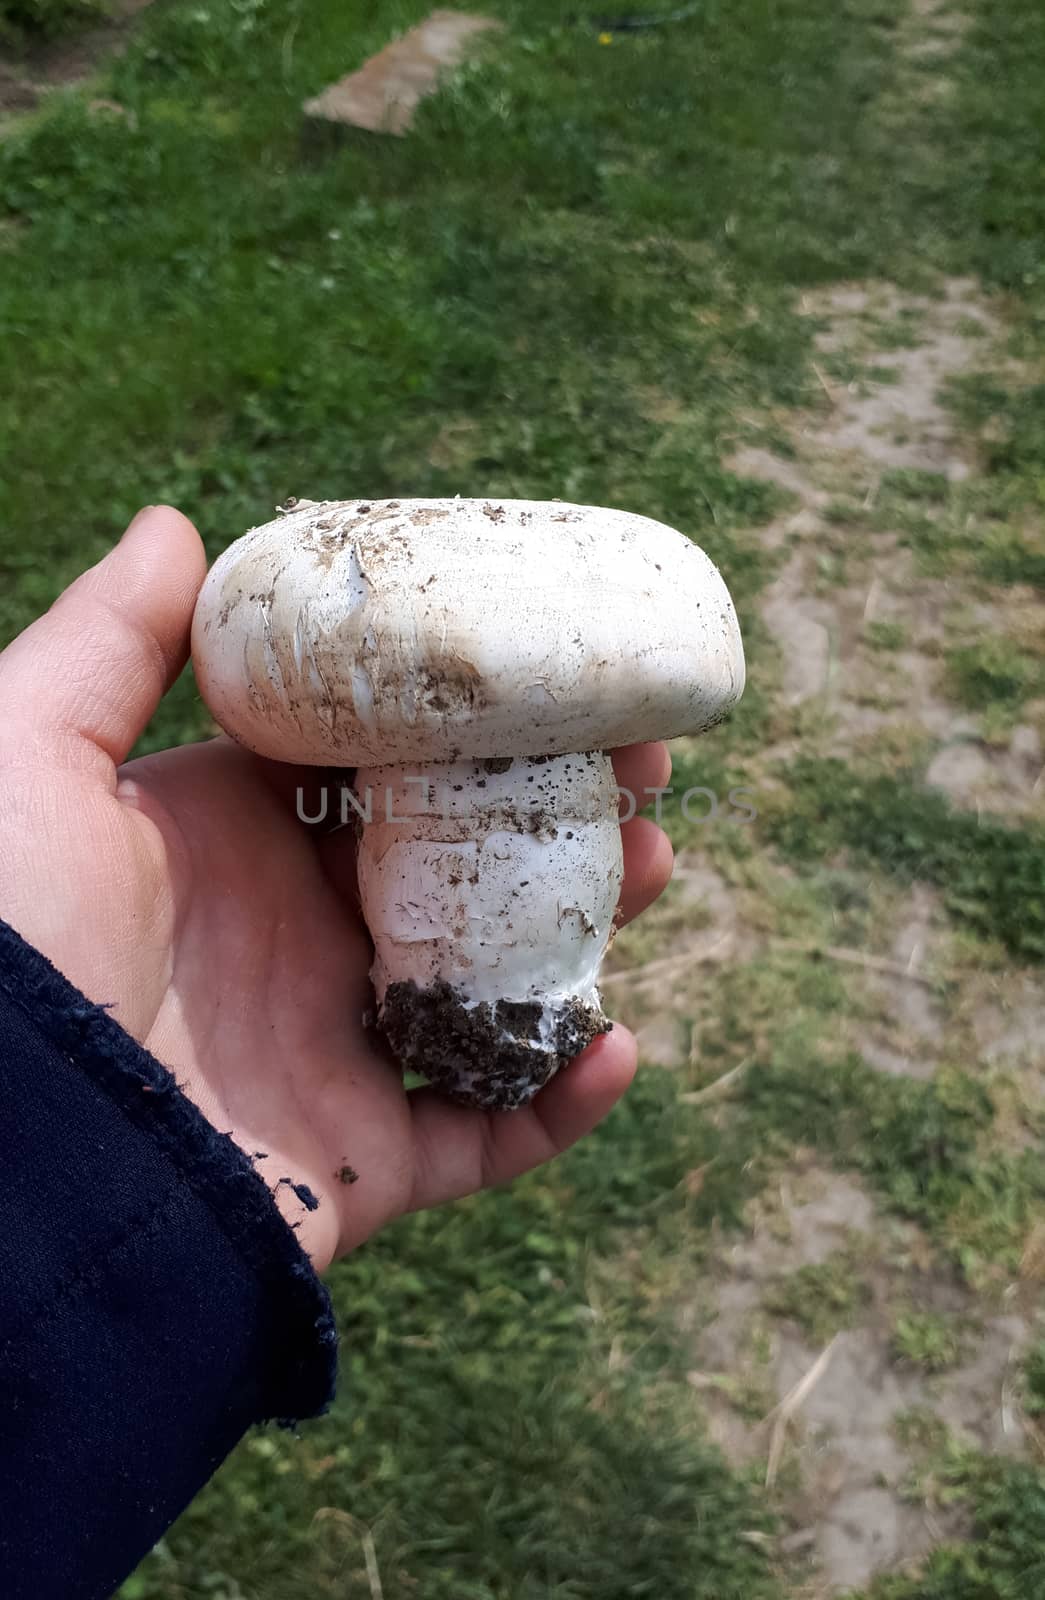 A large mushroom mushroom in a woman's hand. White big mushroom champignon,